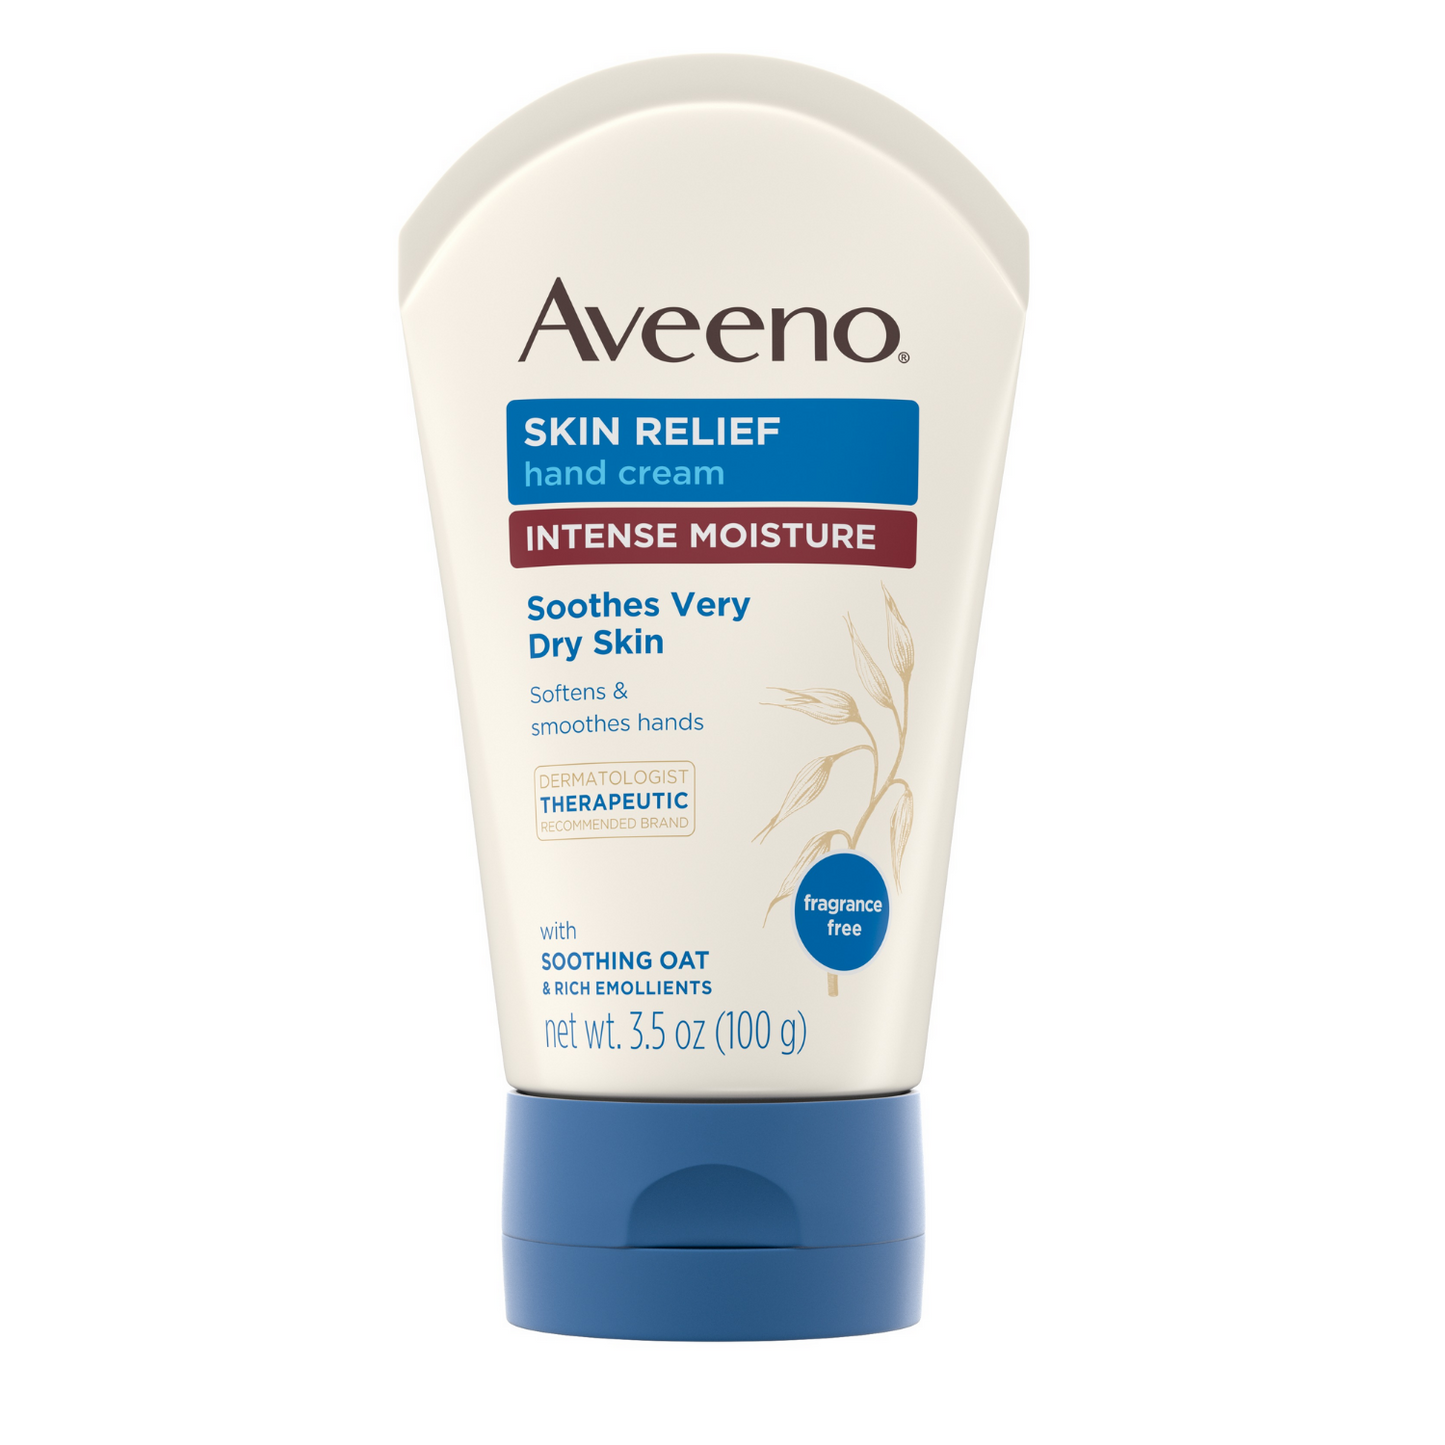 Aveeno Skin Relief Intense Moisture Hand Cream, 3.5 oz. / 100g